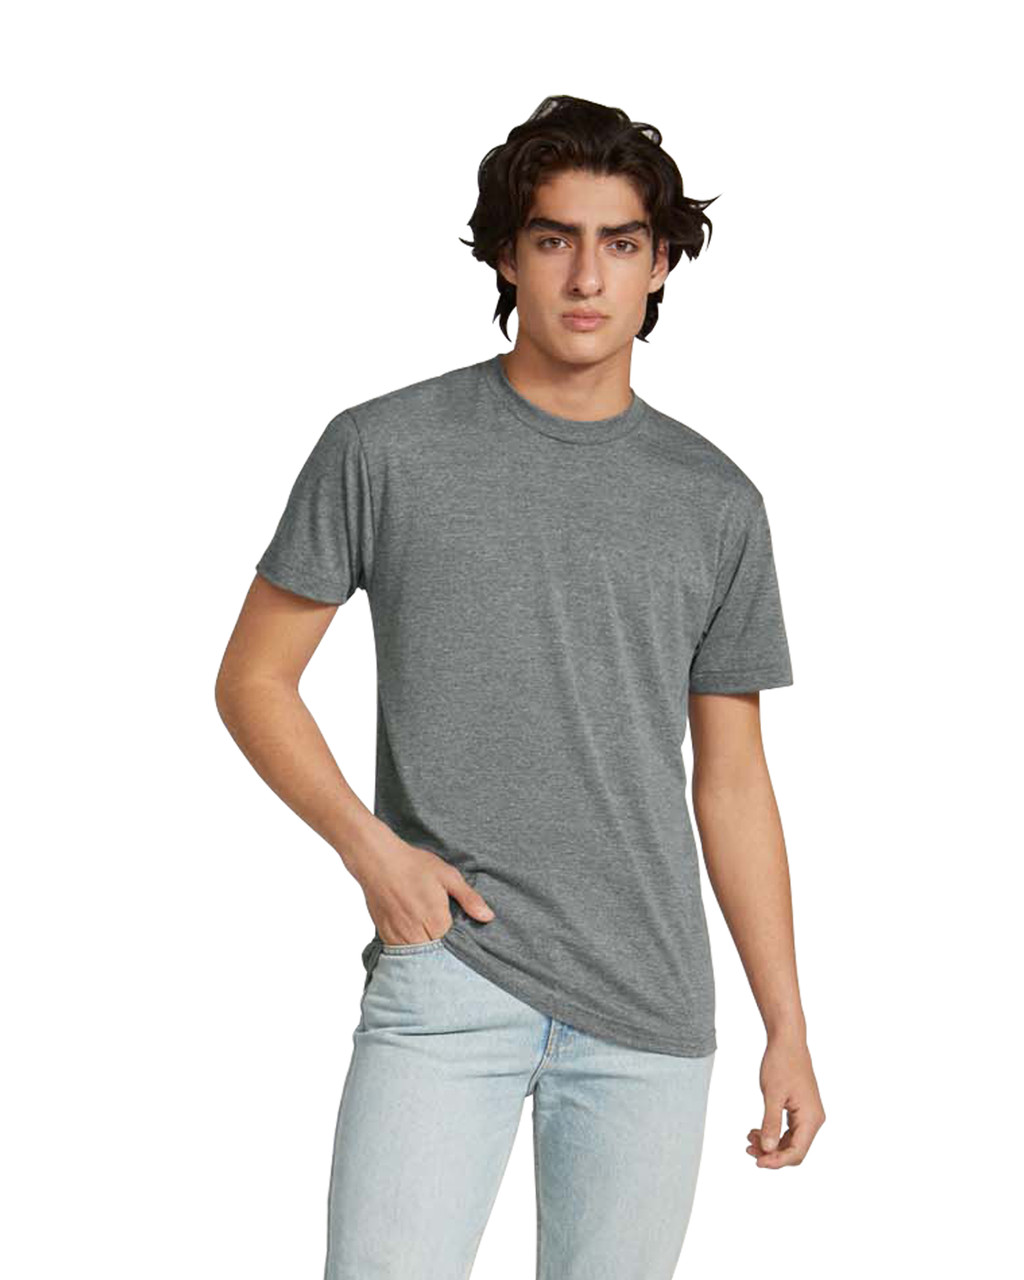 American Apparel Unisex Tri-Blend V-Neck Short Sleeve T-Shirt, Athletic  Blue, XX-Small